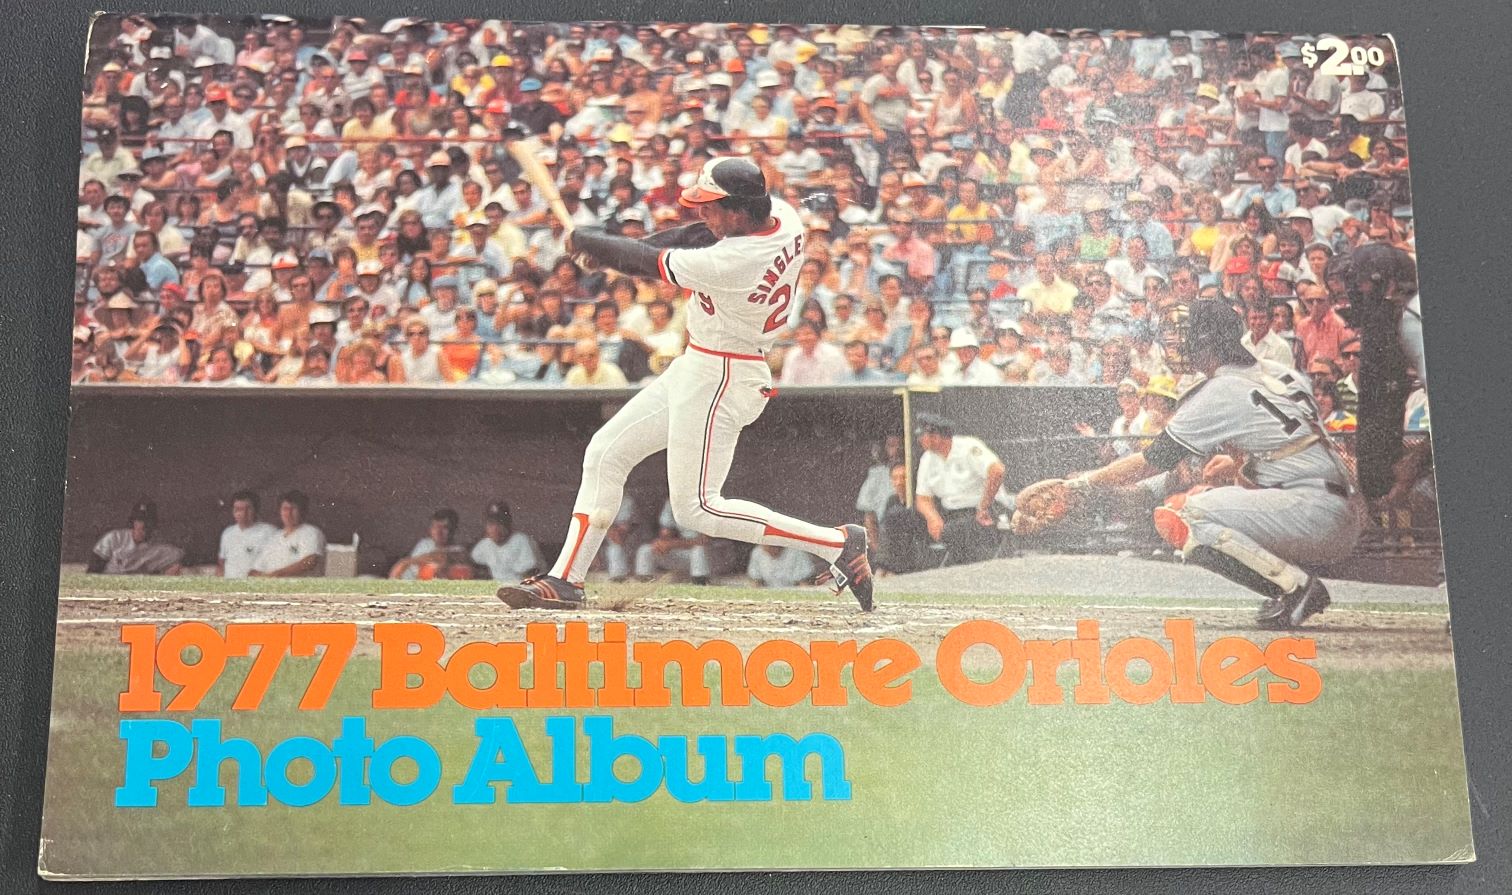 1977 Baltimore Orioles Photo Album